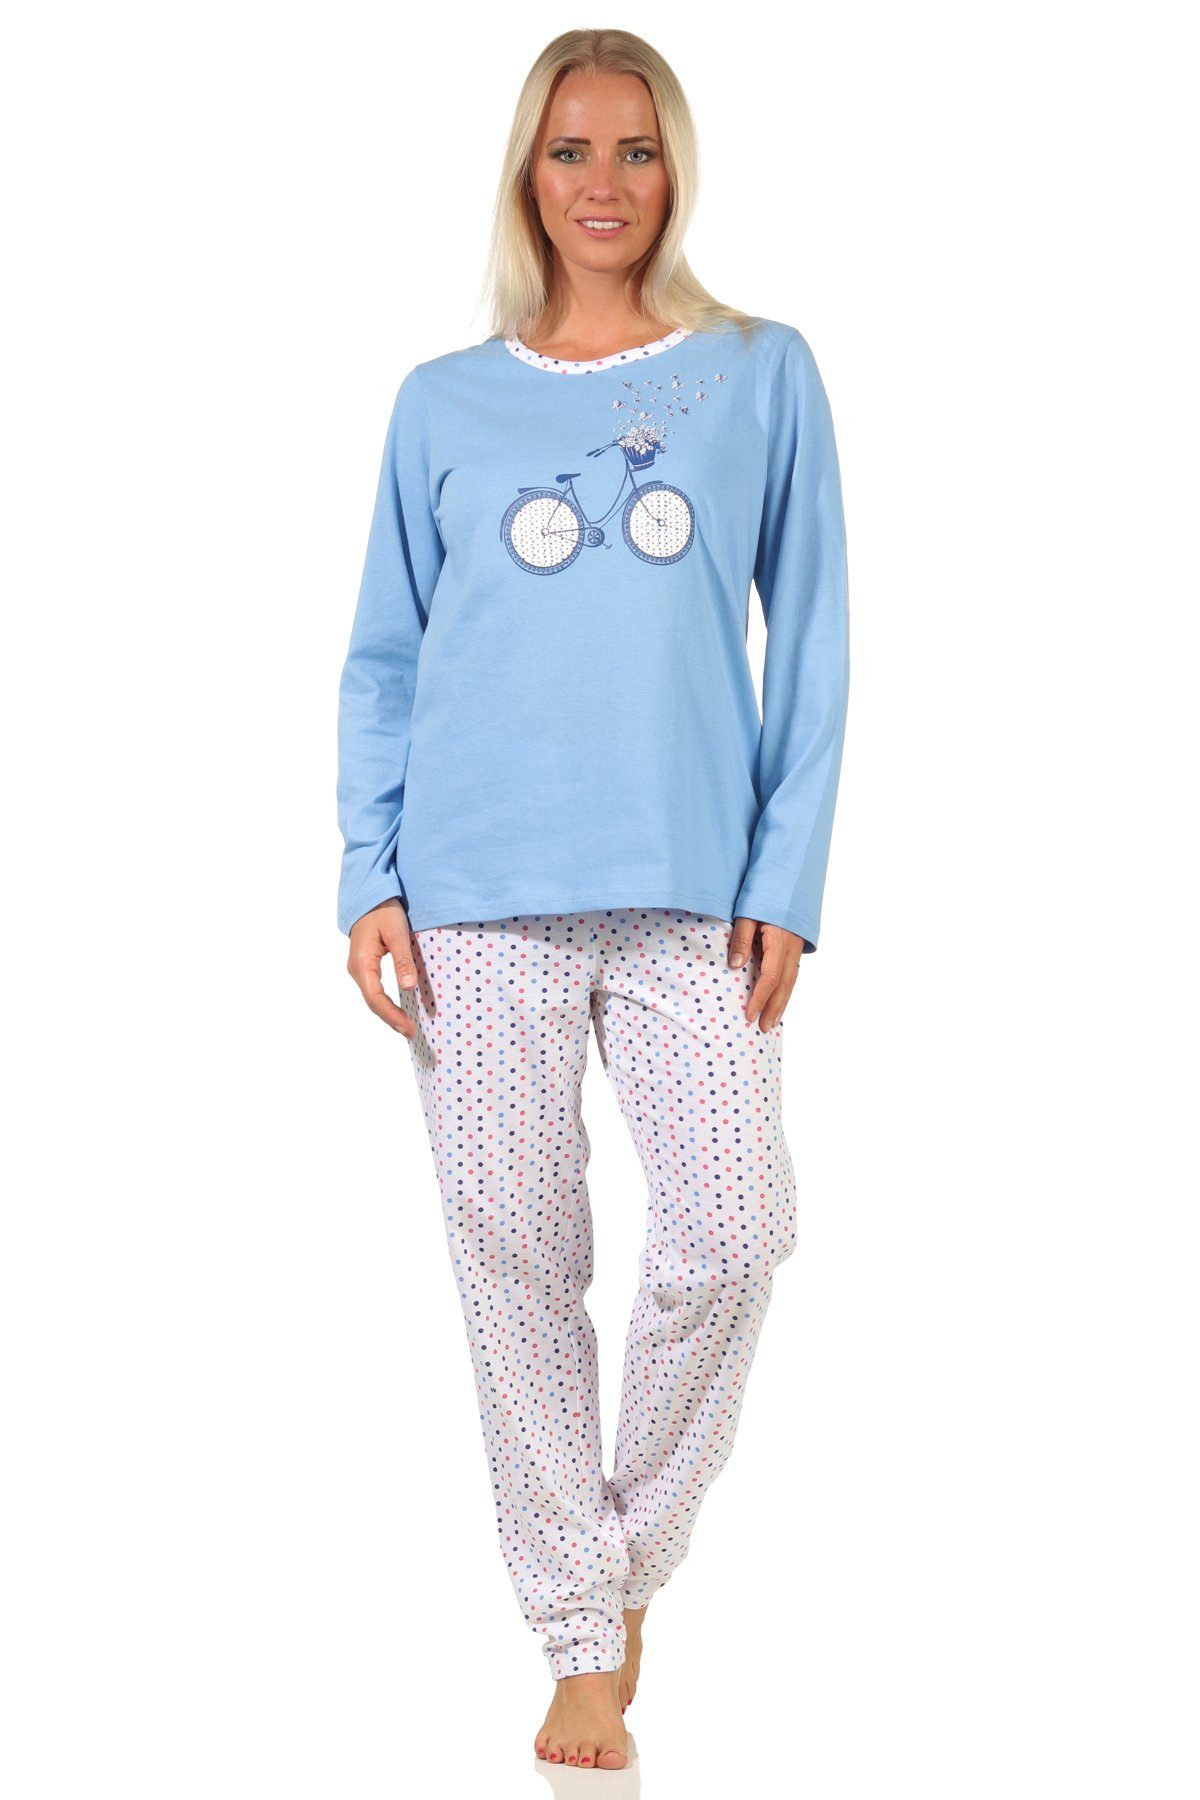 RELAX by Damen langarm Optik Schlafanzug Normann blau mit Pyjama in Punkten Pyjama frühlingshafter